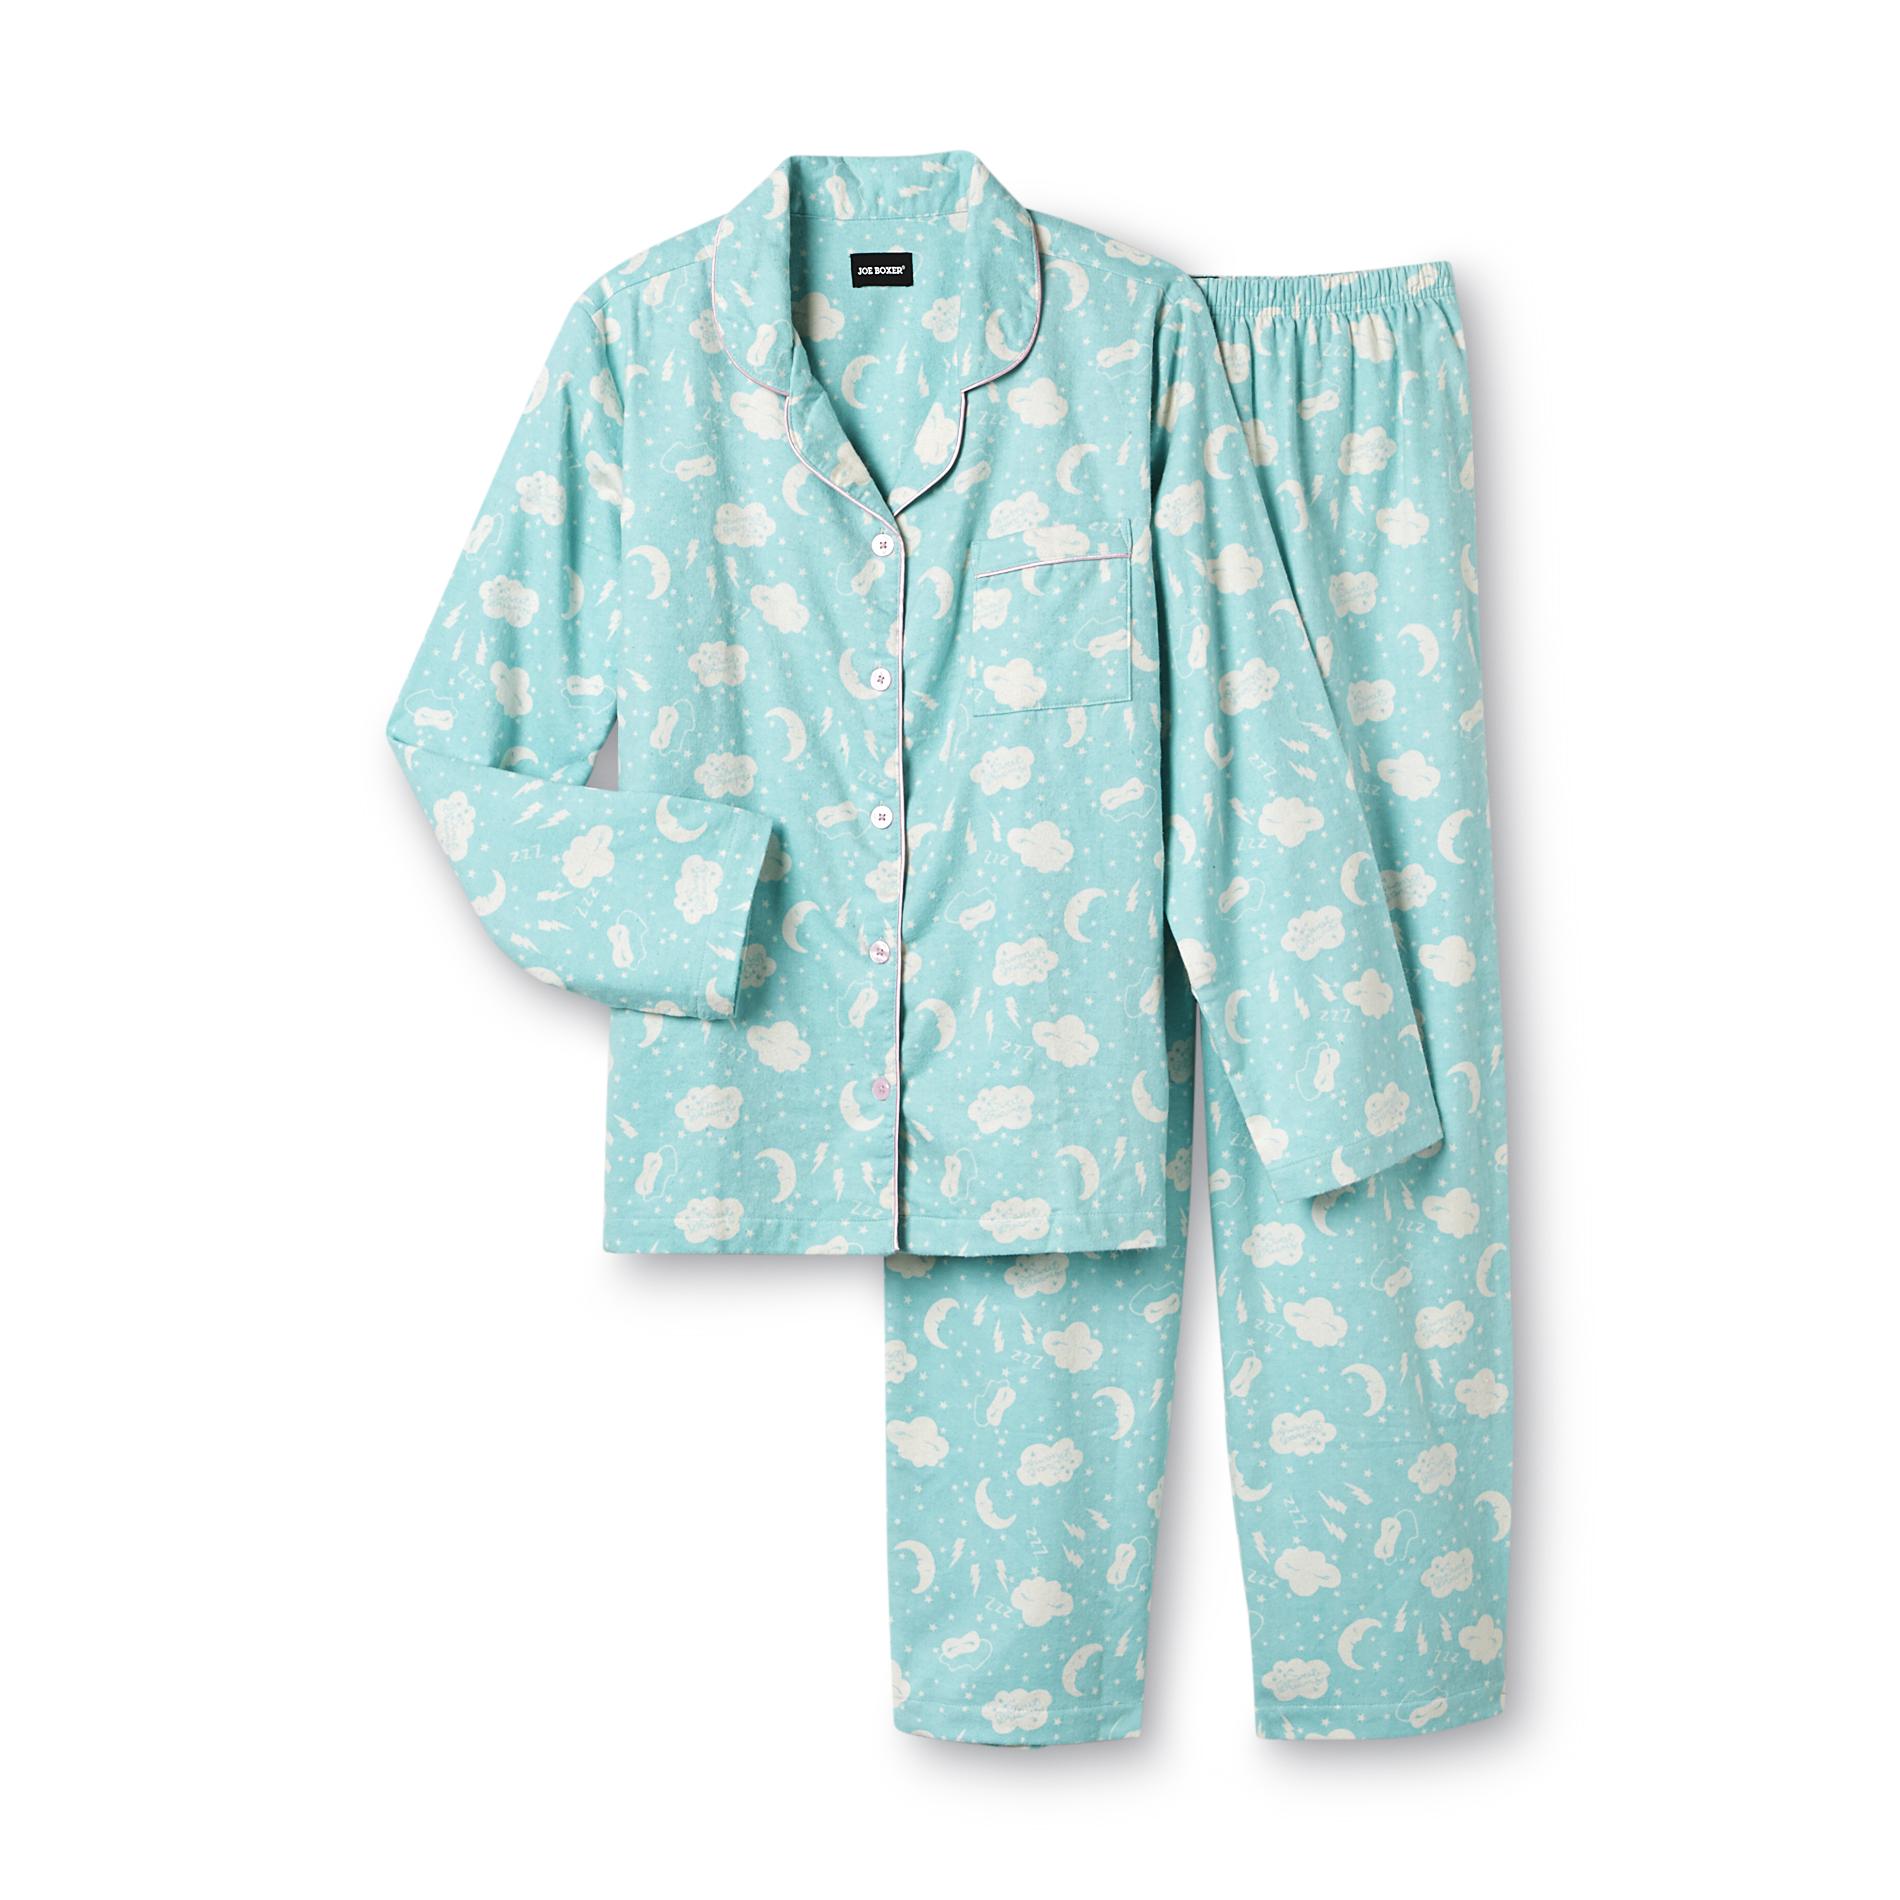 Joe Boxer Women's 2-Piece Flannel Pajama Set - Sweet Dreams/Clouds